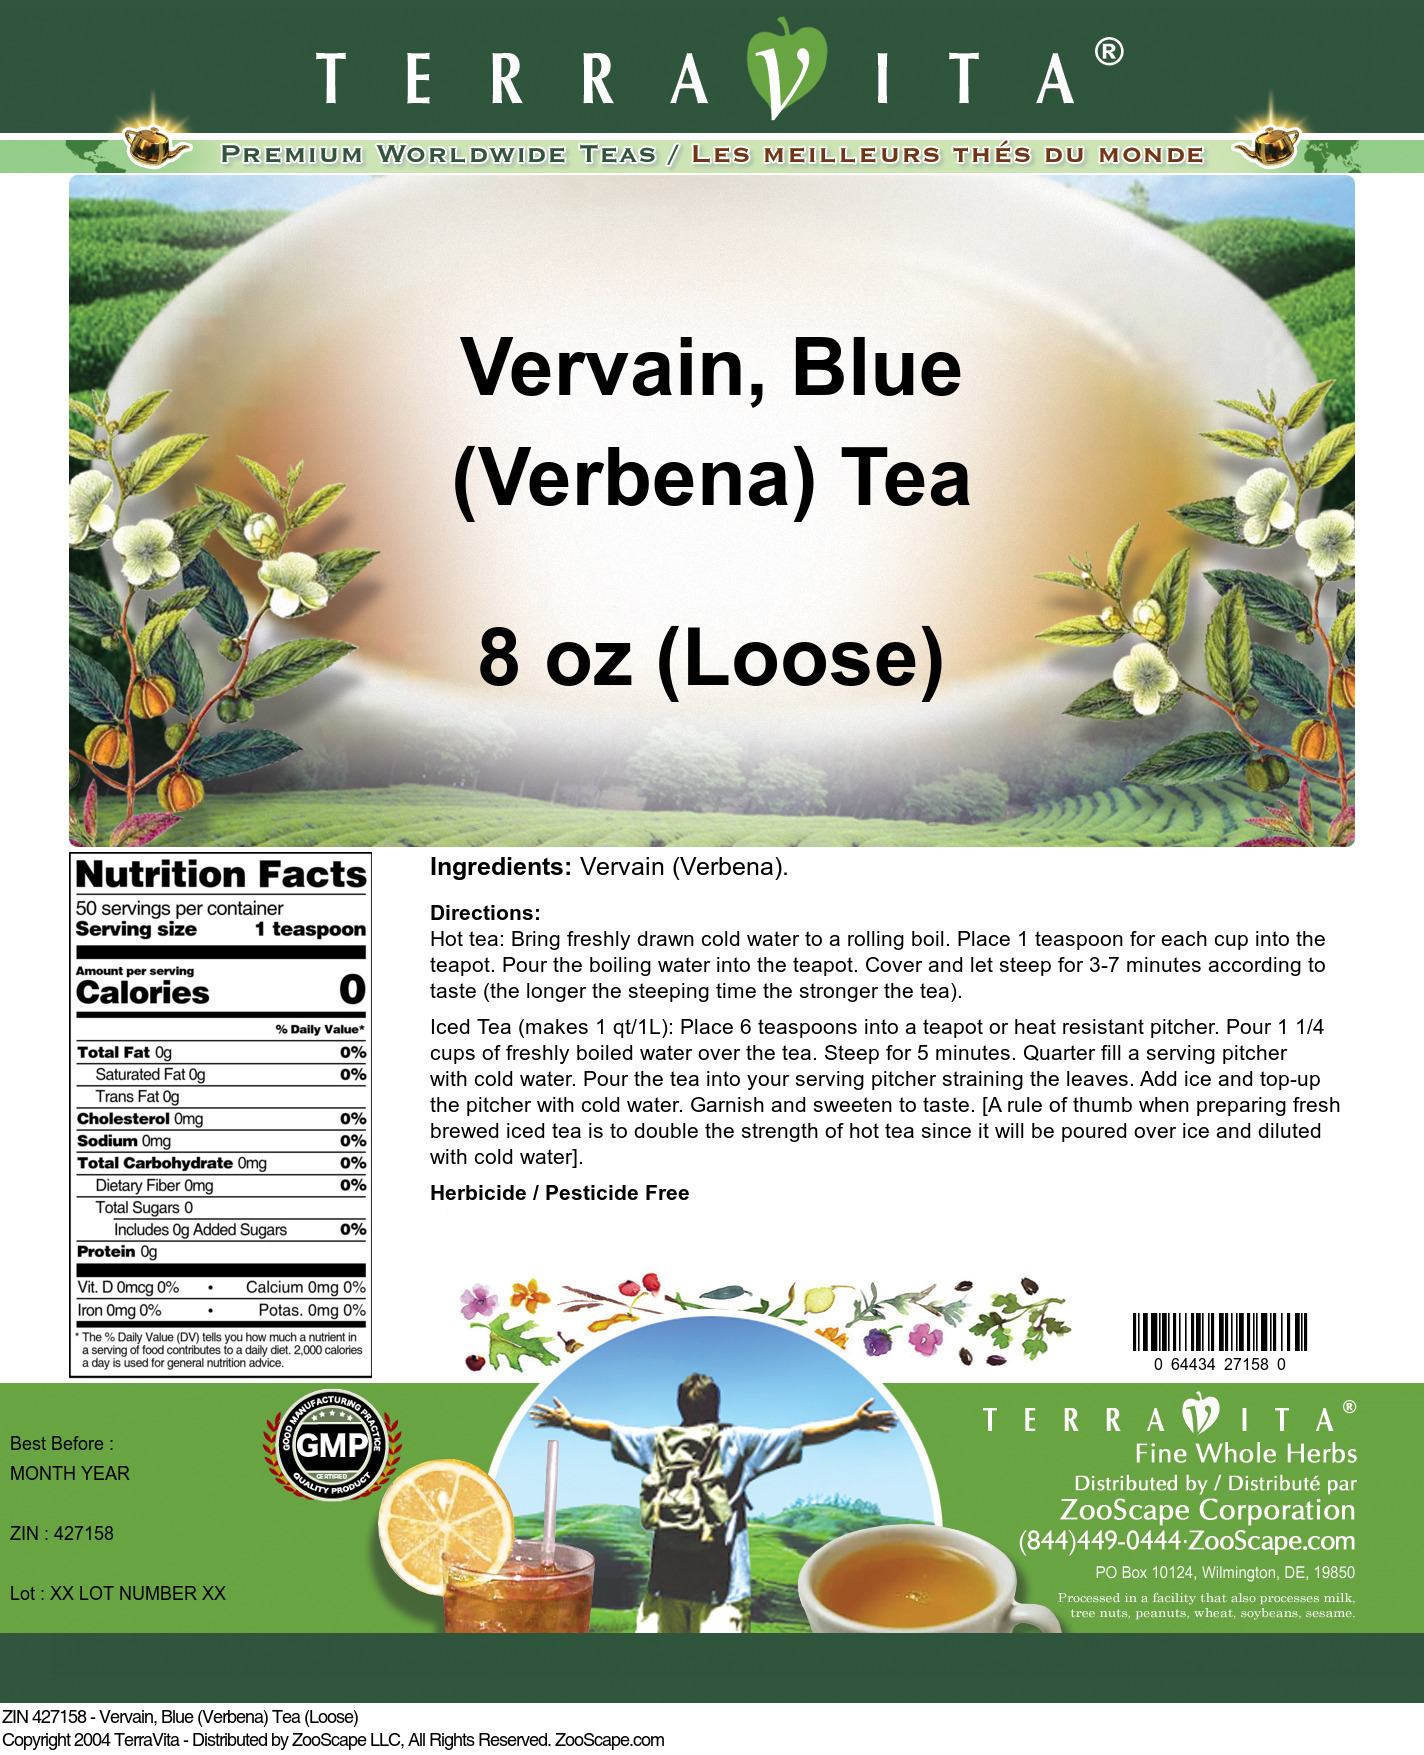 Vervain, Blue (Verbena) Tea (Loose) - Label